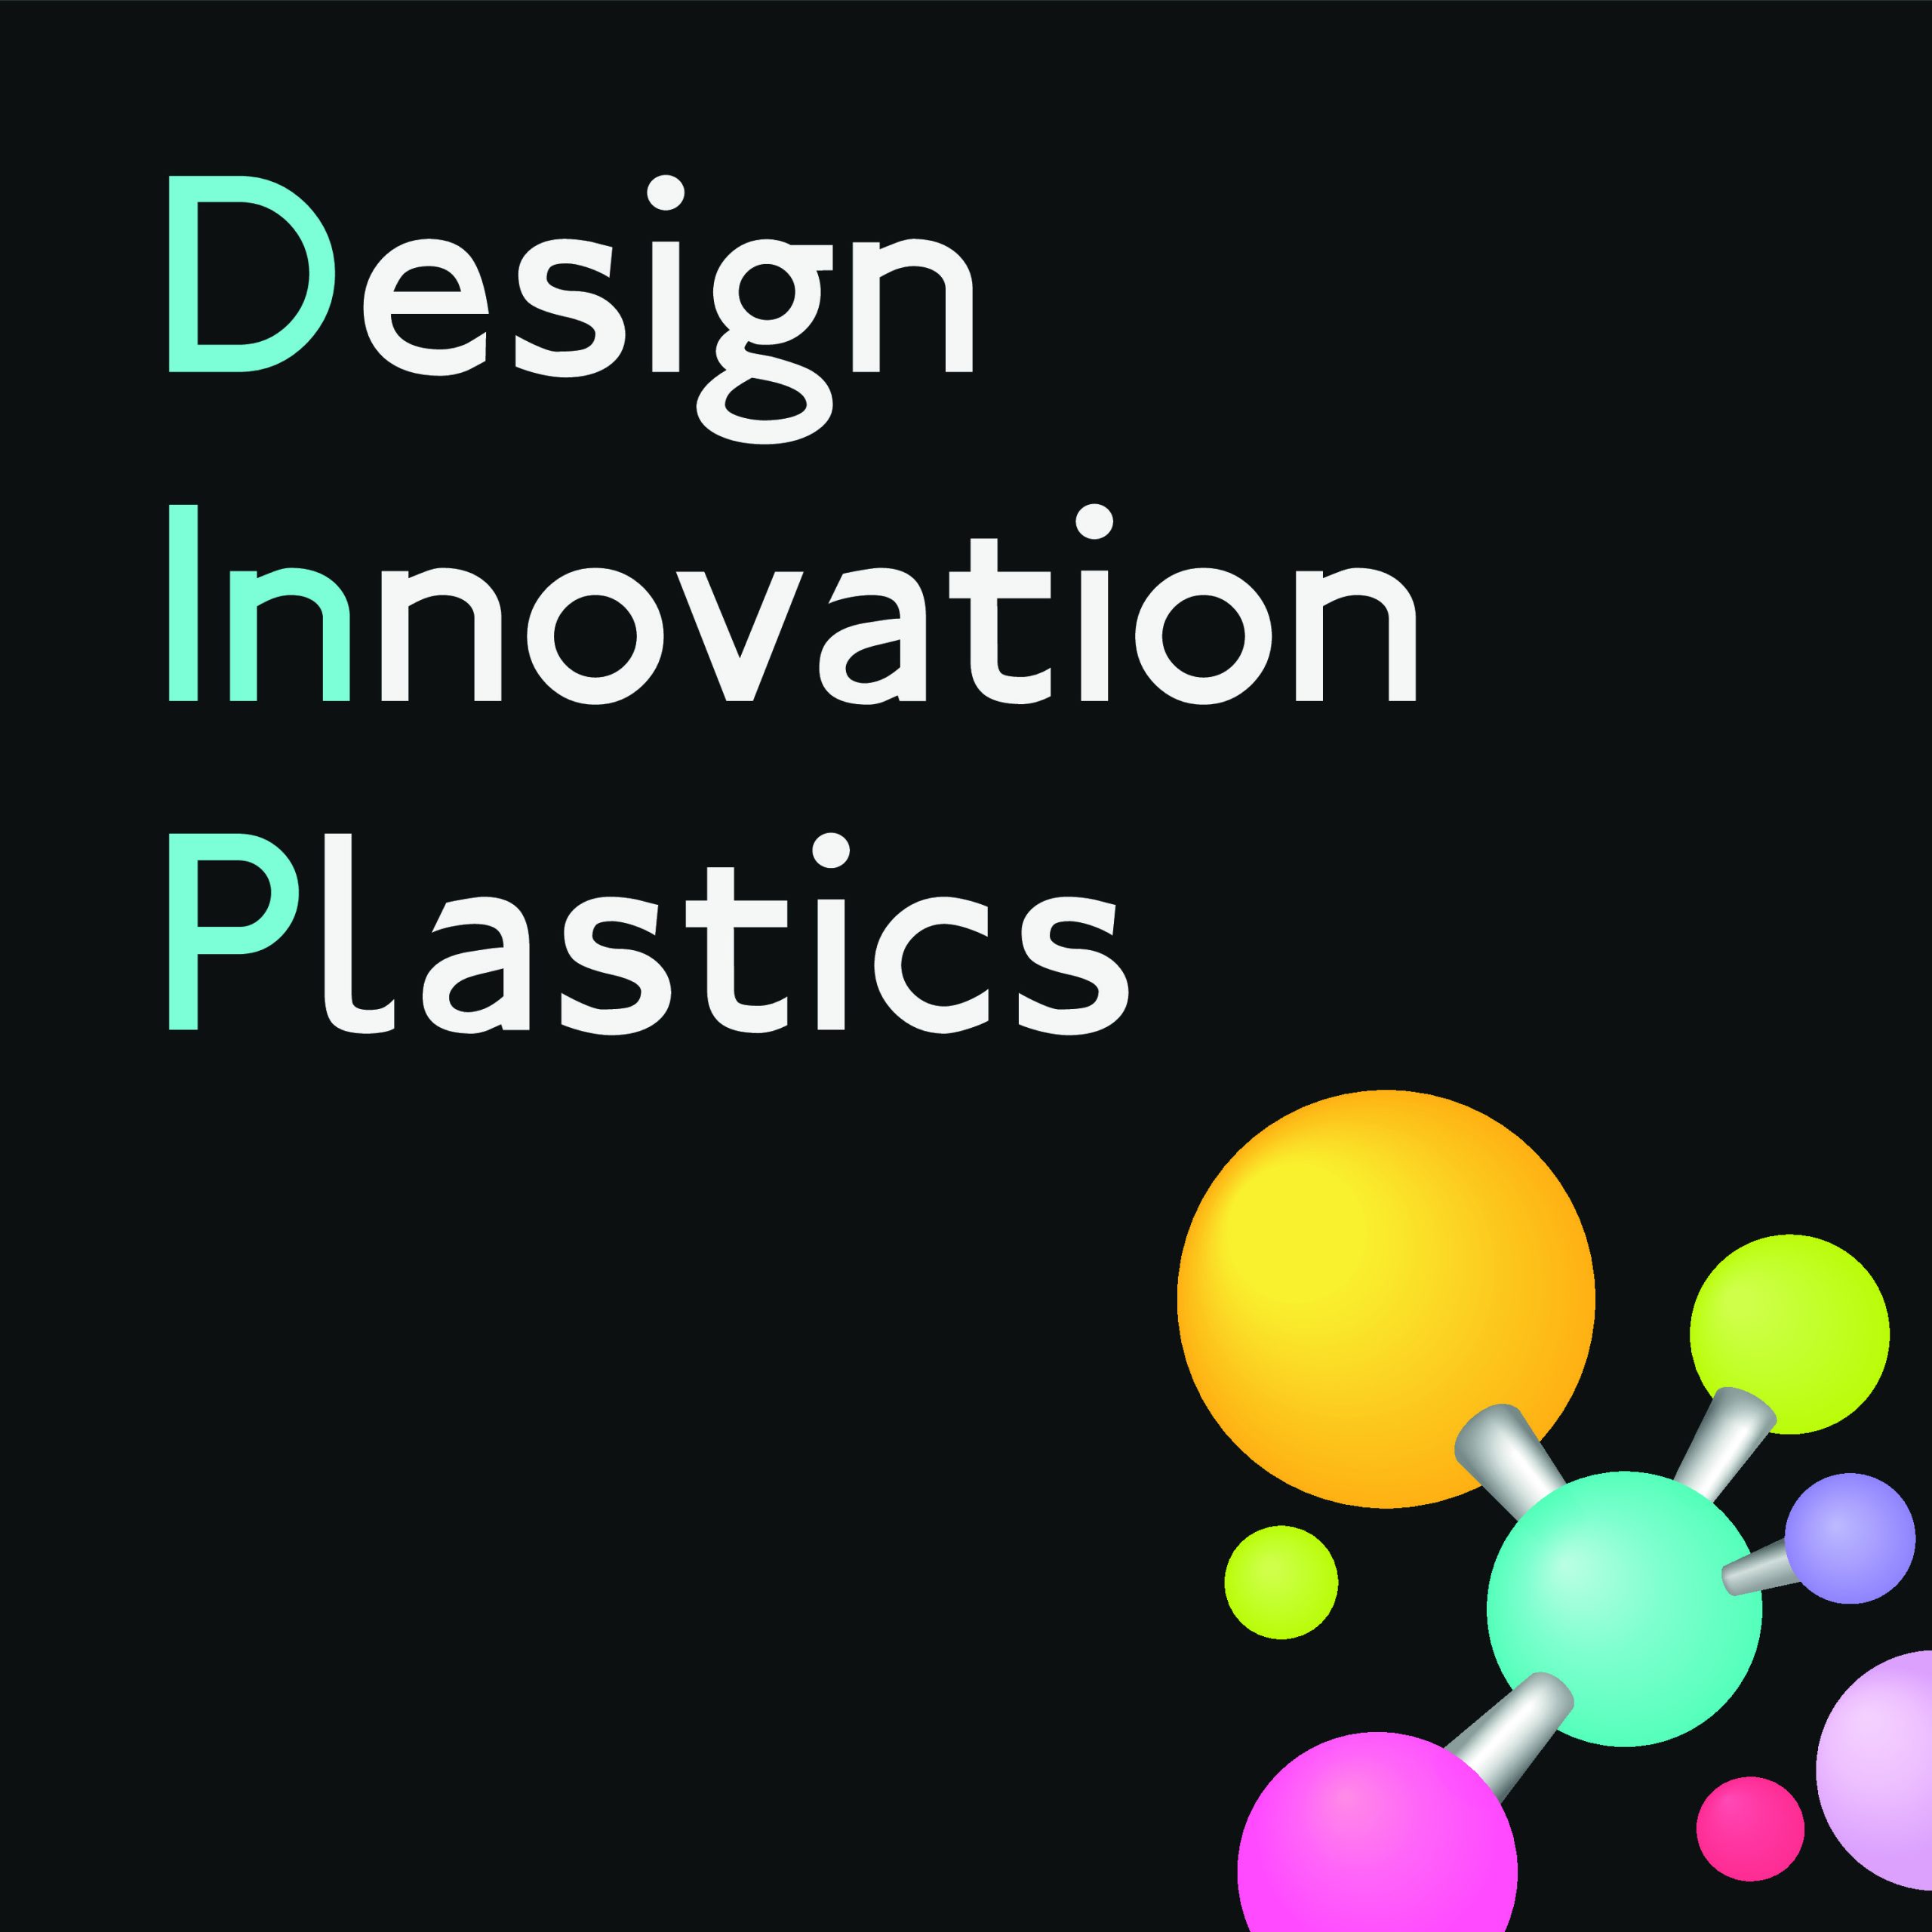 The Design Innovation in Plastics Award for the most innovative use of plastics